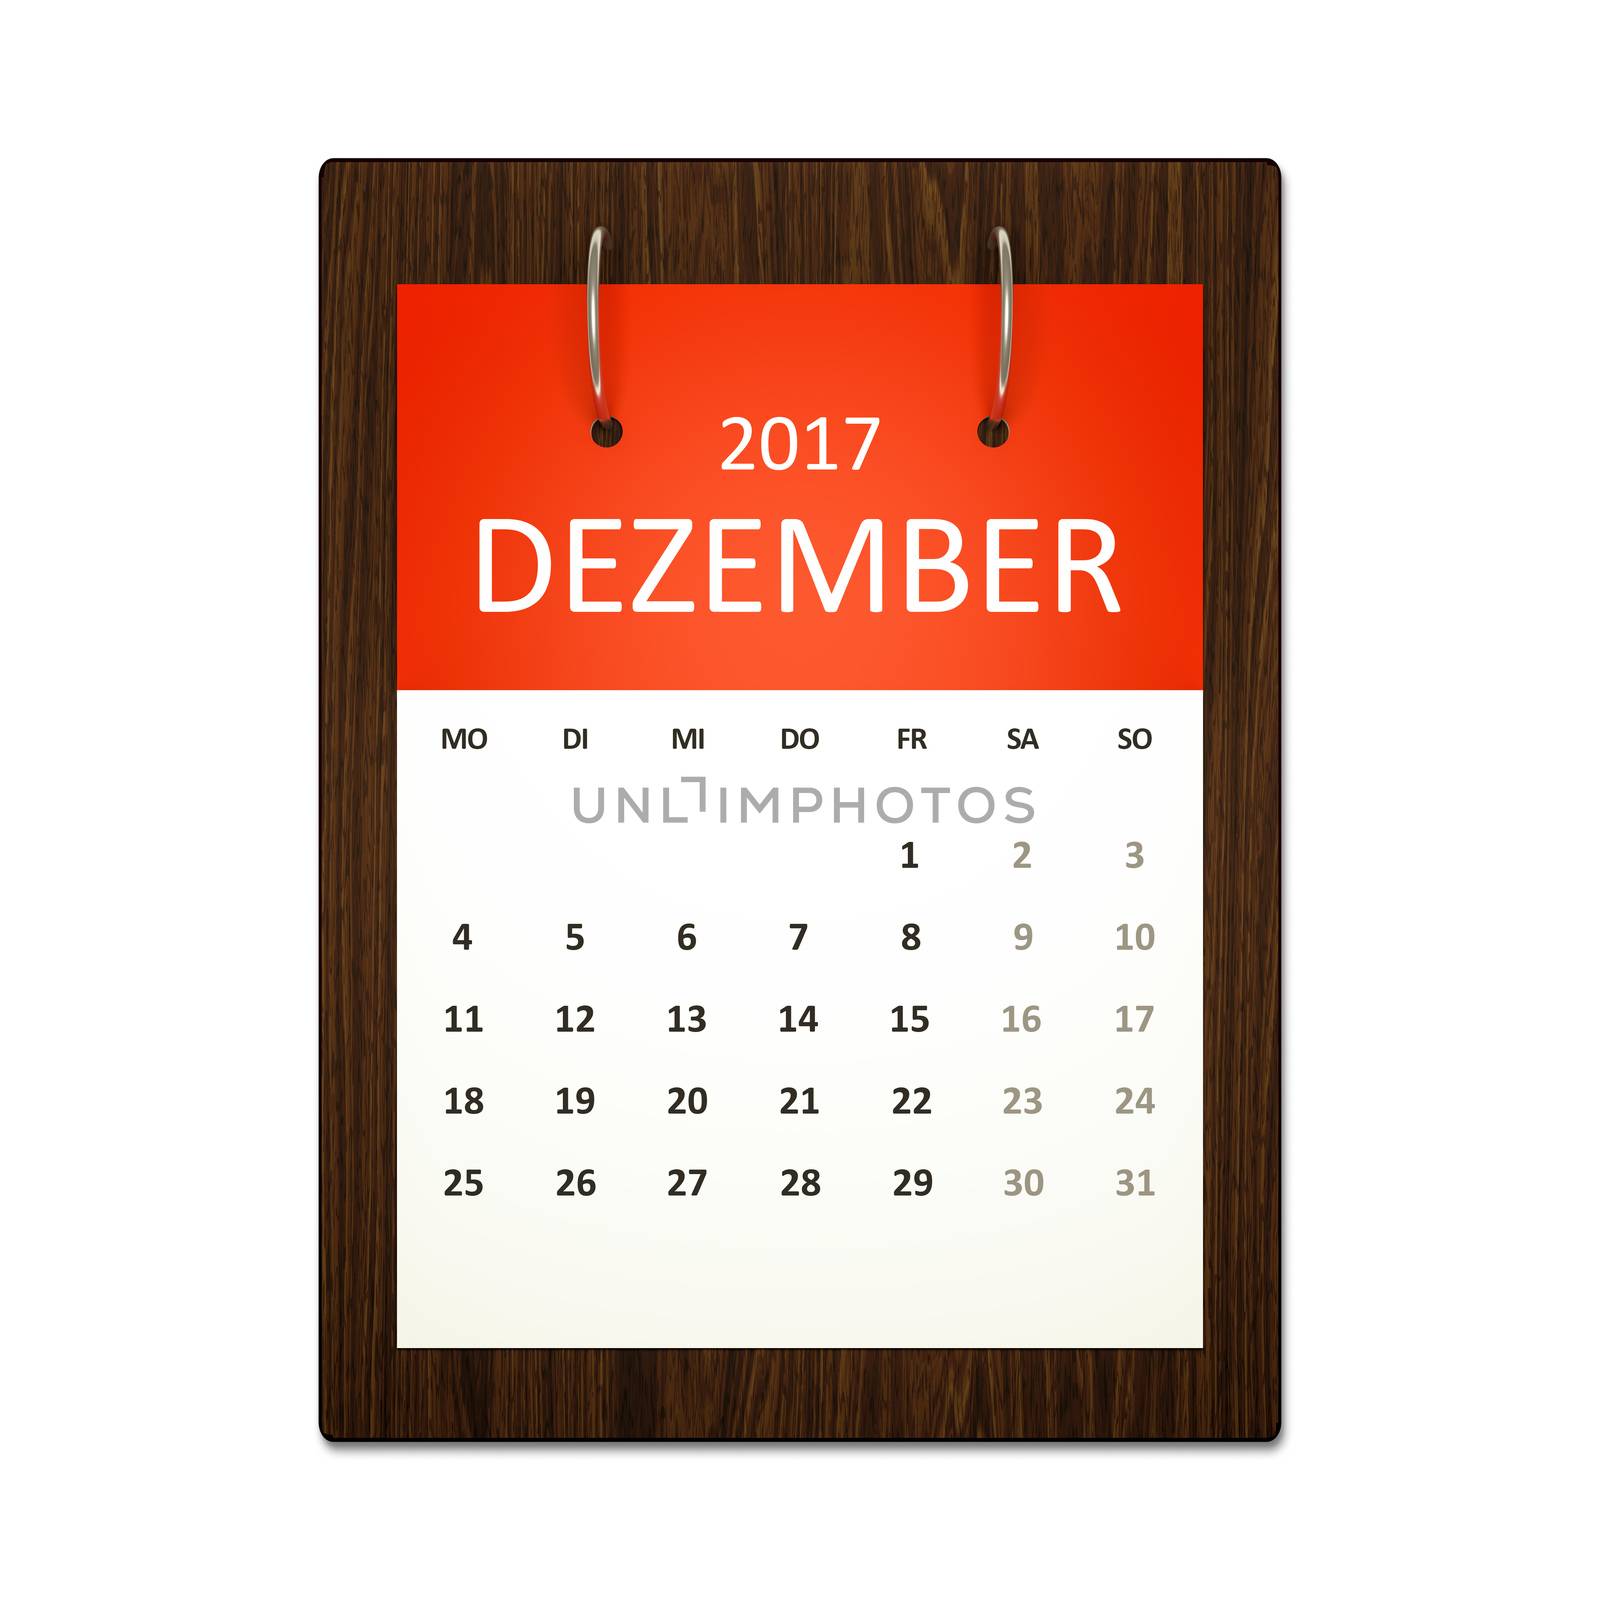 An image of a german calendar for event planning 2017 december